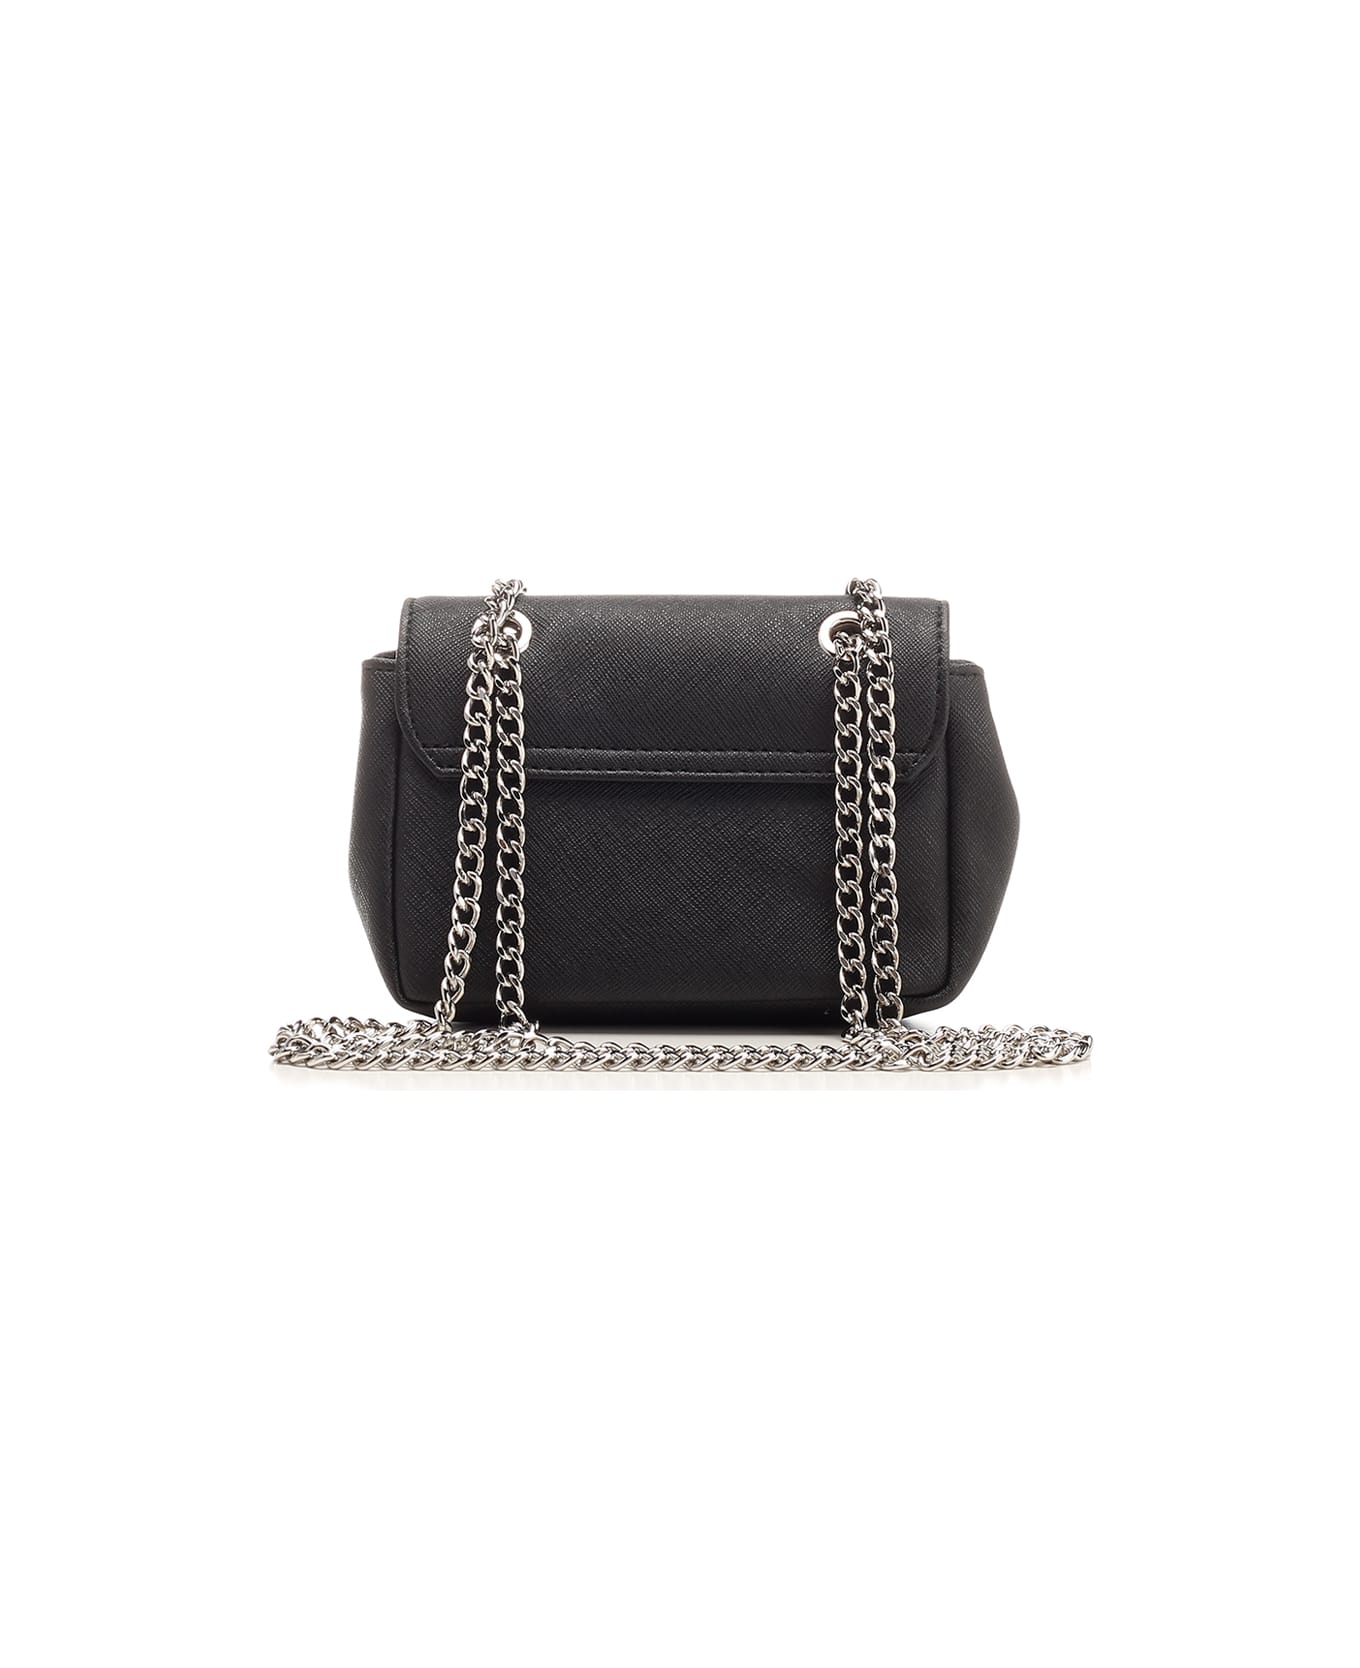 Vivienne Westwood Shoulder Bag With Chain - Nero